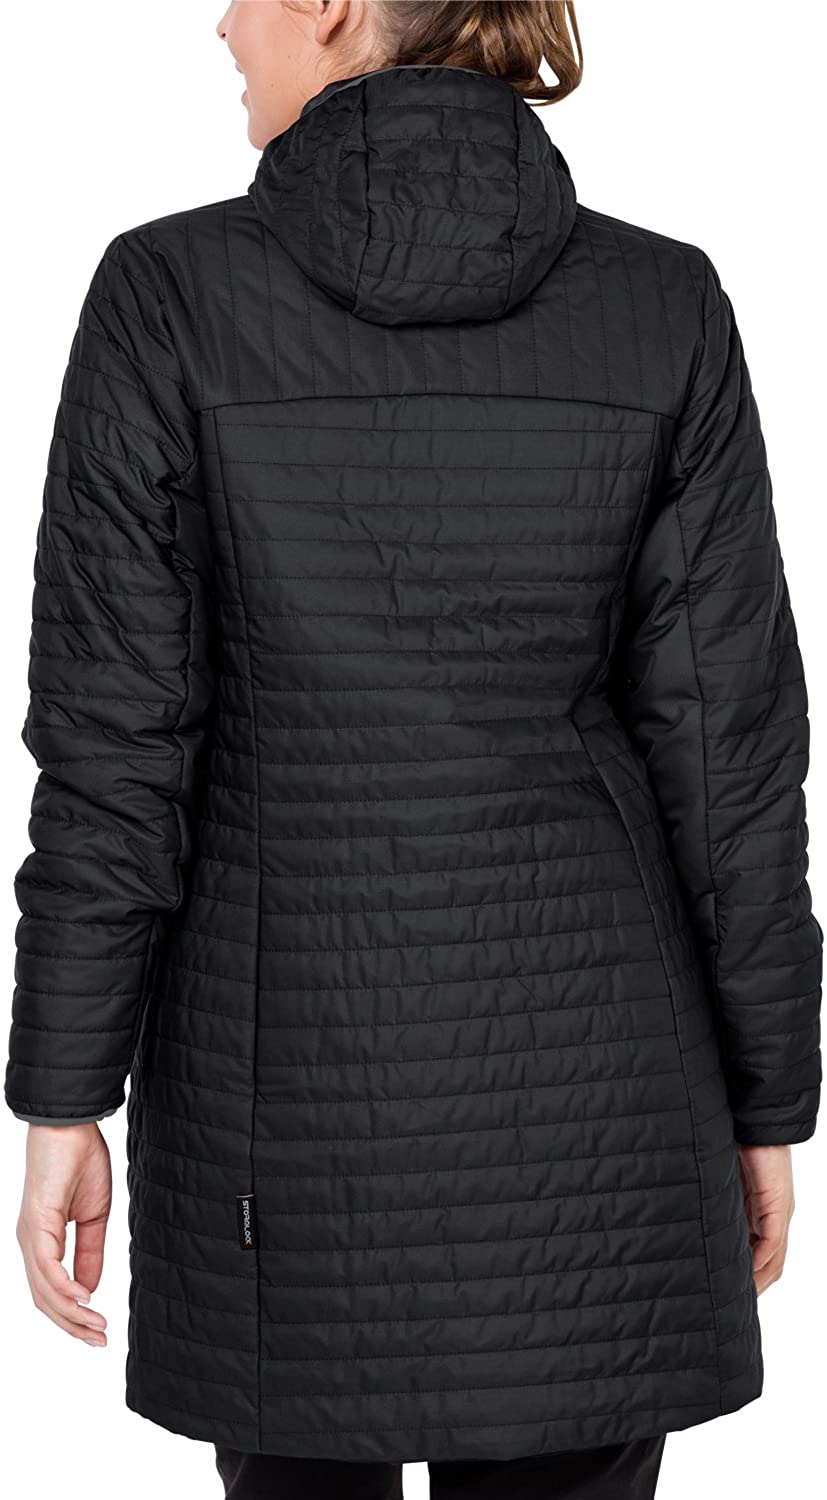 Jack Wolfskin Clarenville coat black (ladies) (1201902-6000) size L2